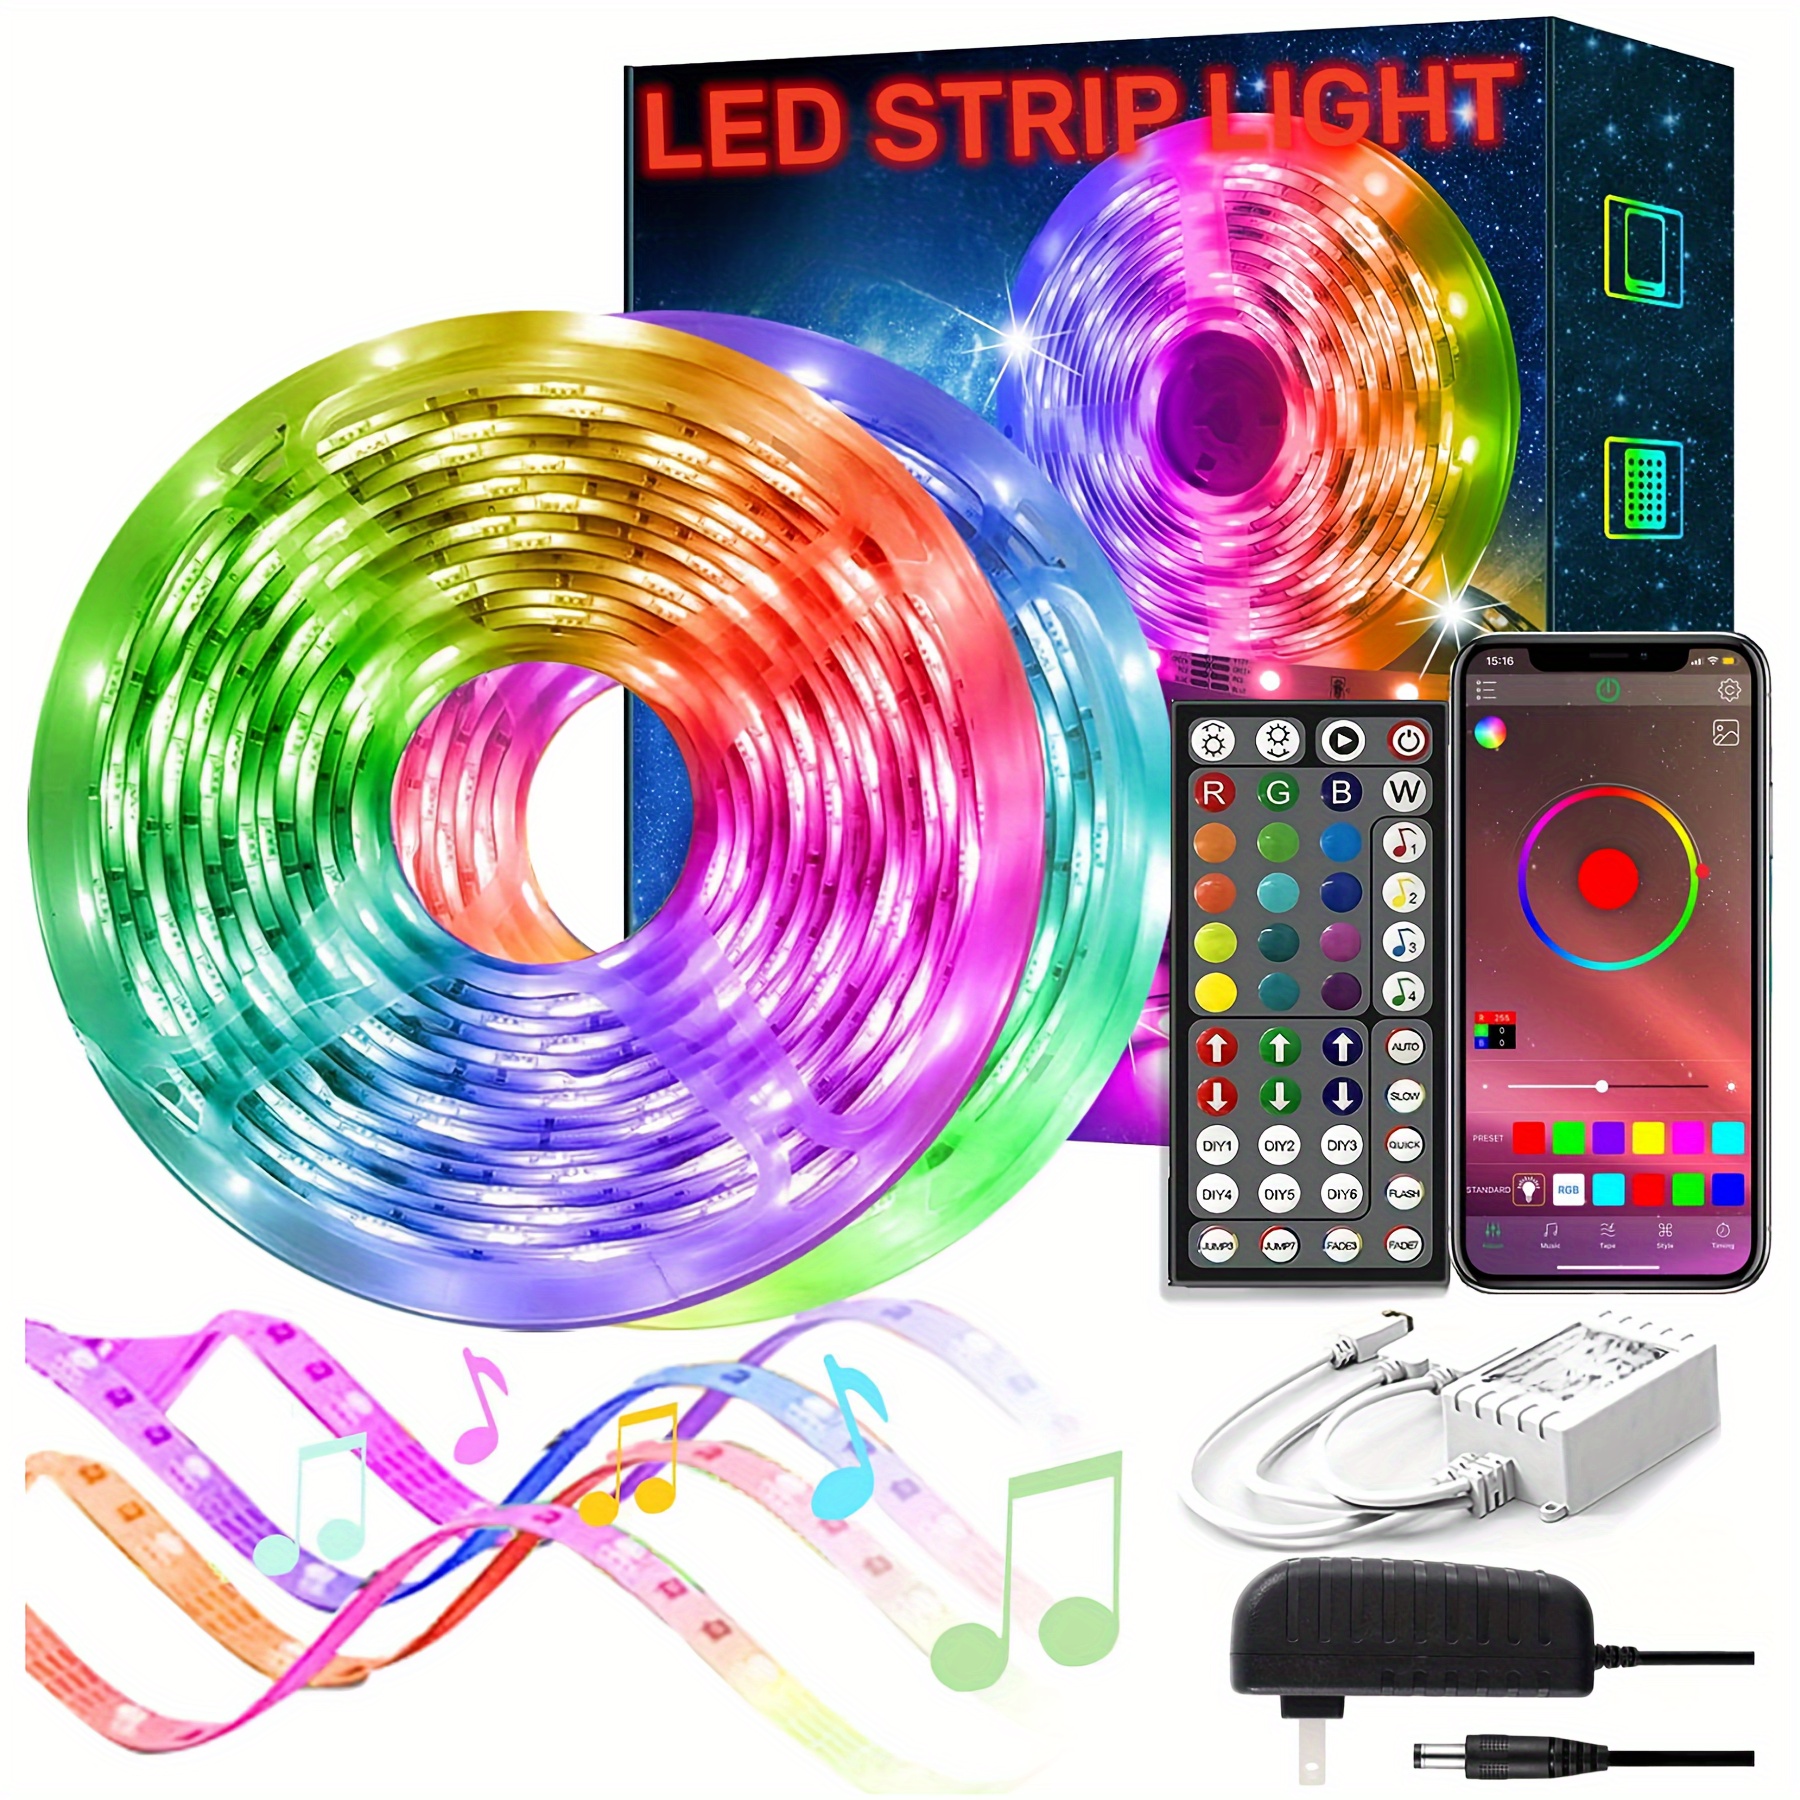 https://img.kwcdn.com/product/color-changing-rgb-led-strip-lights/d69d2f15w98k18-0306bcd3/Fancyalgo/VirtualModelMatting/381e3b76146bdedd3c0716166b60a1fc.jpg?imageView2/2/w/500/q/60/format/webp